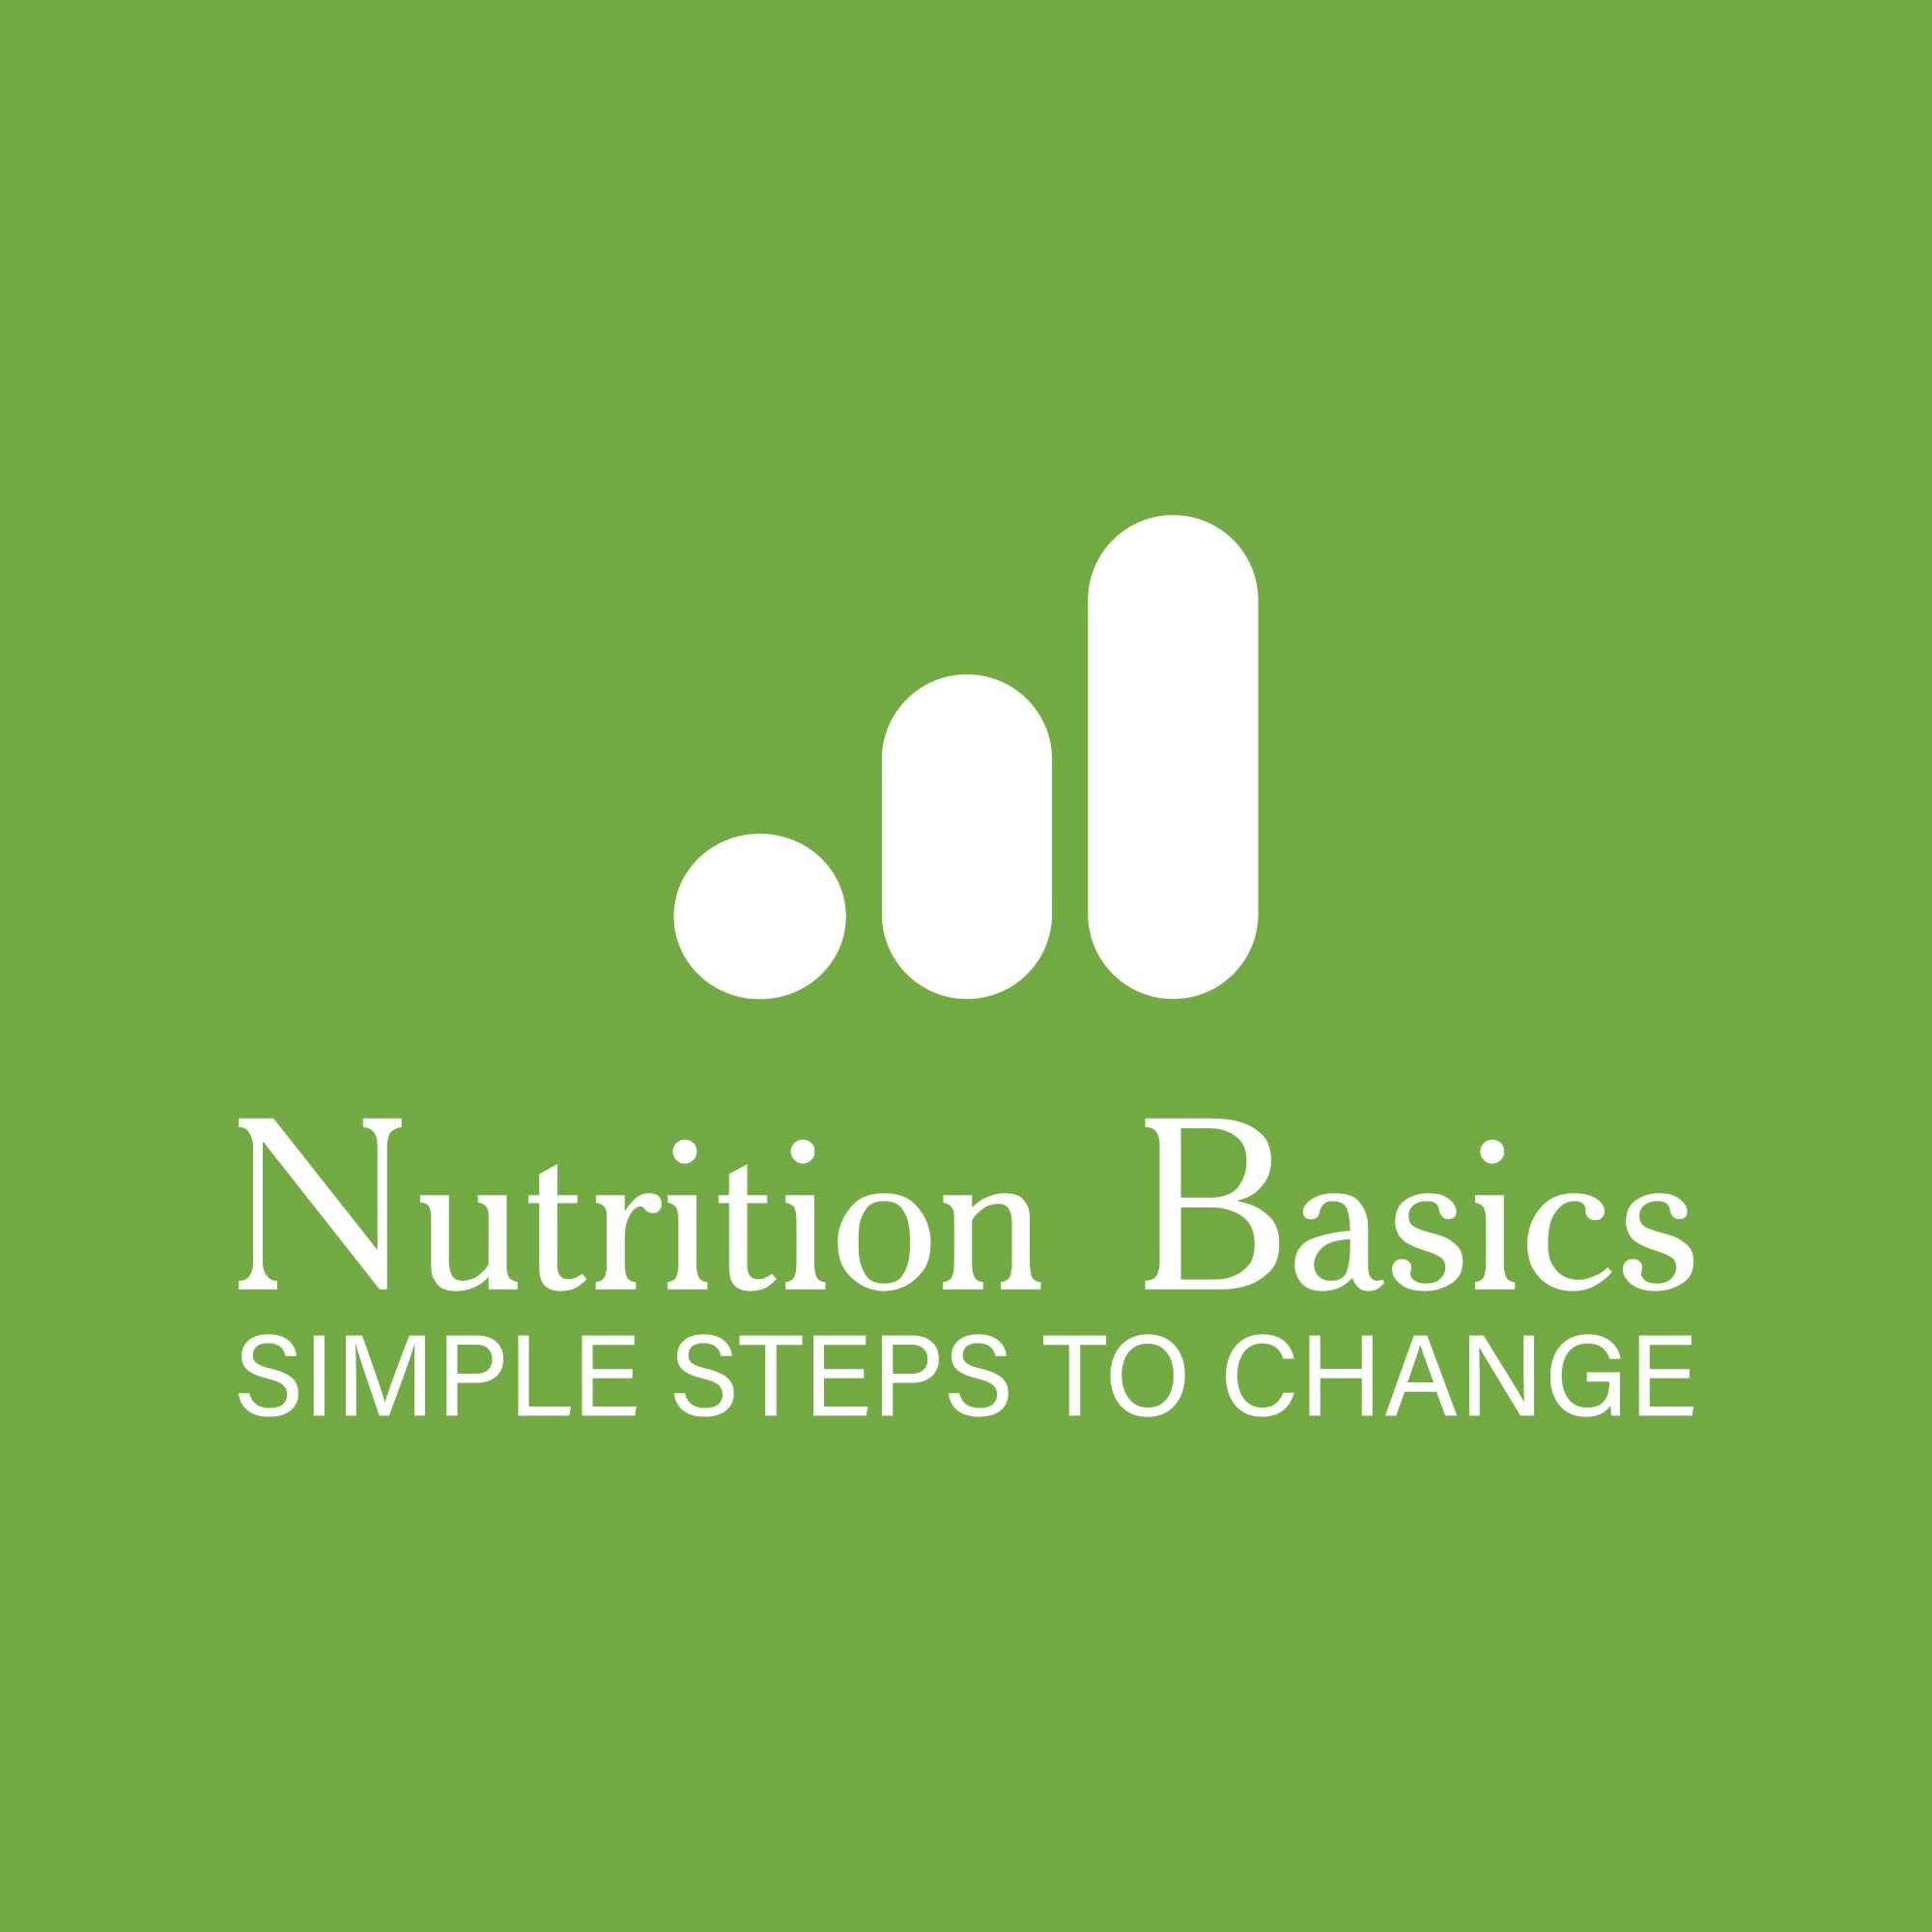 Simple Steps Nutrition